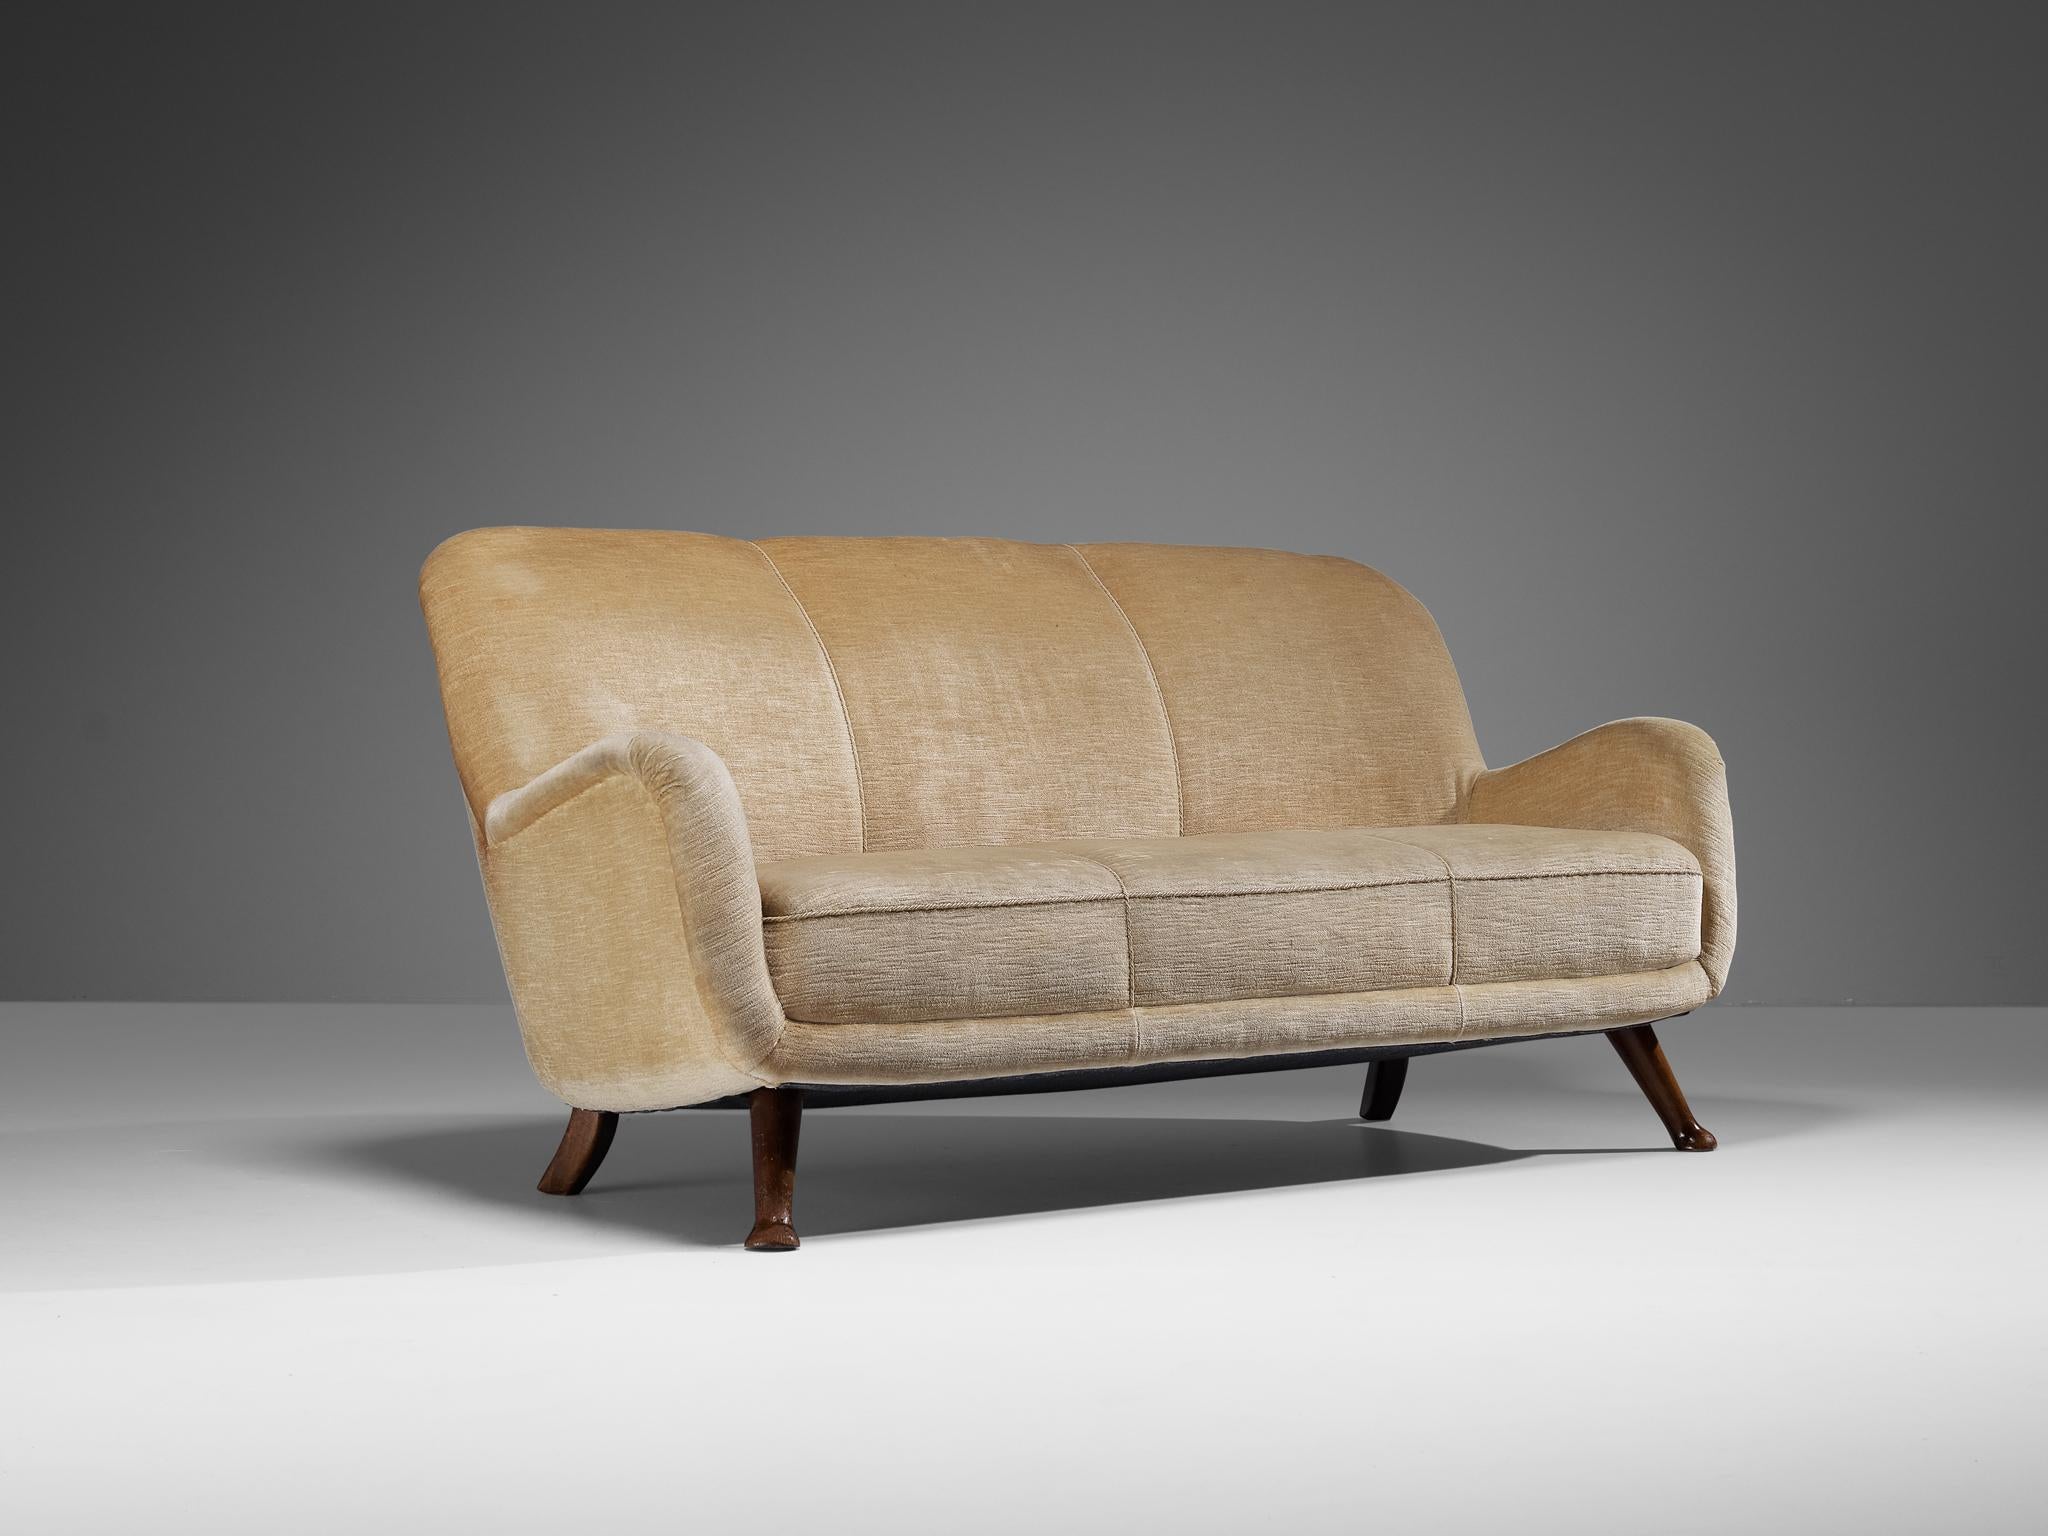 Berga Mobler Sofa in Beige Wool Upholstery